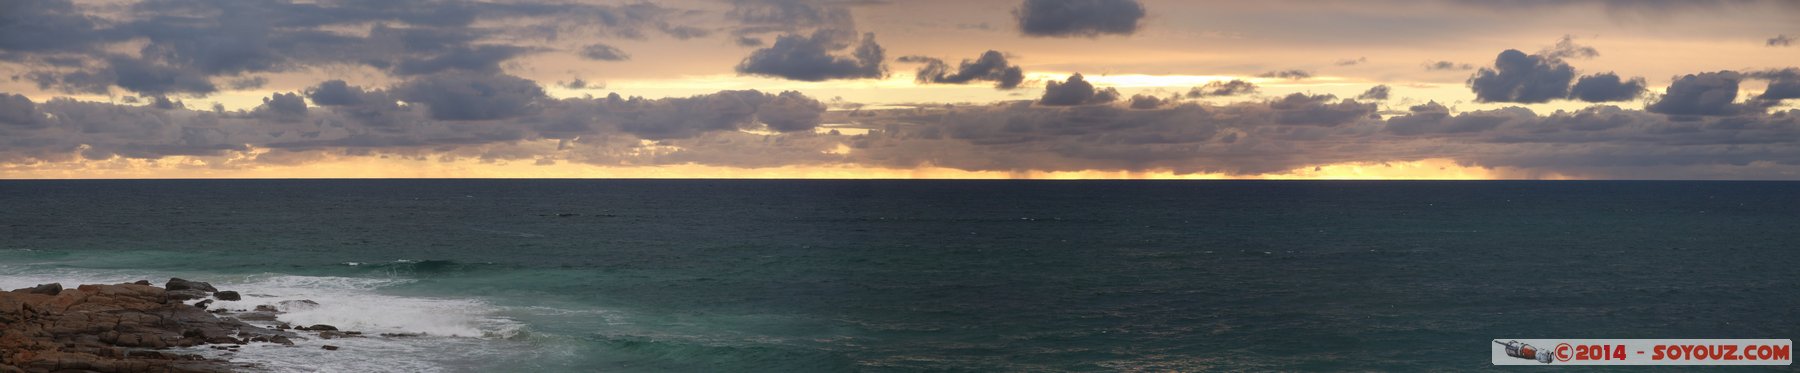 Margaret River - Gnarabup Beach - Sunset - Panorama
Stitched Panorama
Mots-clés: AUS Australie geo:lat=-34.00259713 geo:lon=114.99743630 geotagged Gnarabup Western Australia Margaret River Gnarabup Beach sunset Lumiere panorama